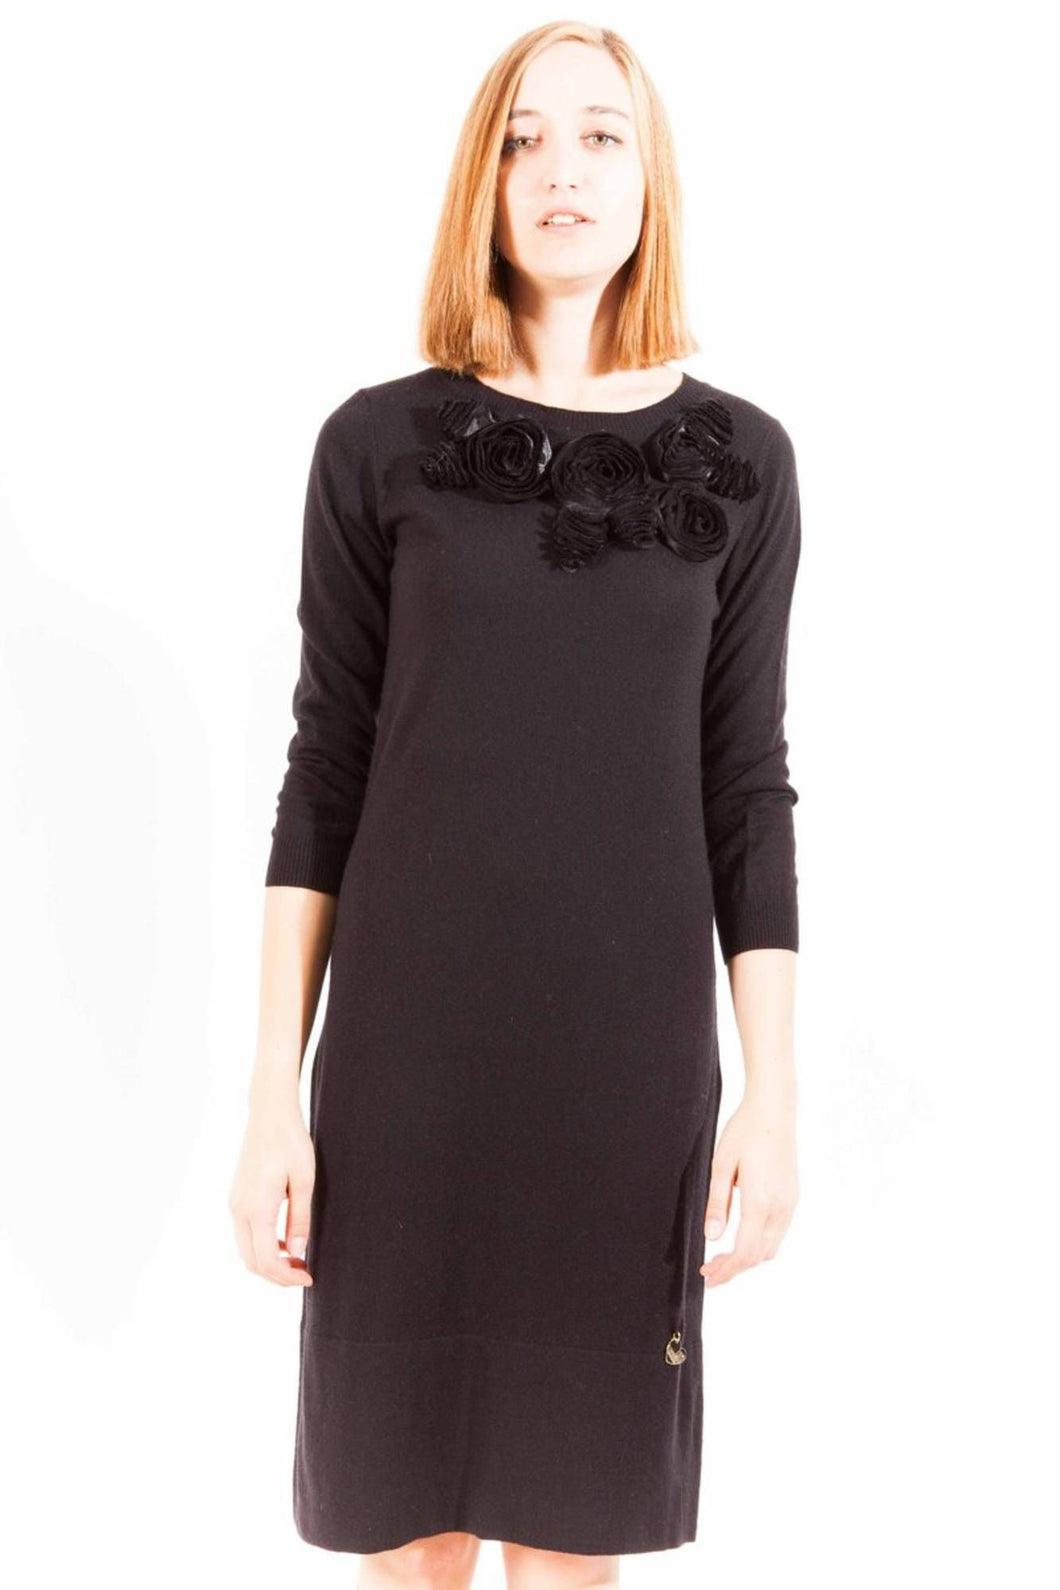 Love Moschino Black Polyester Dress